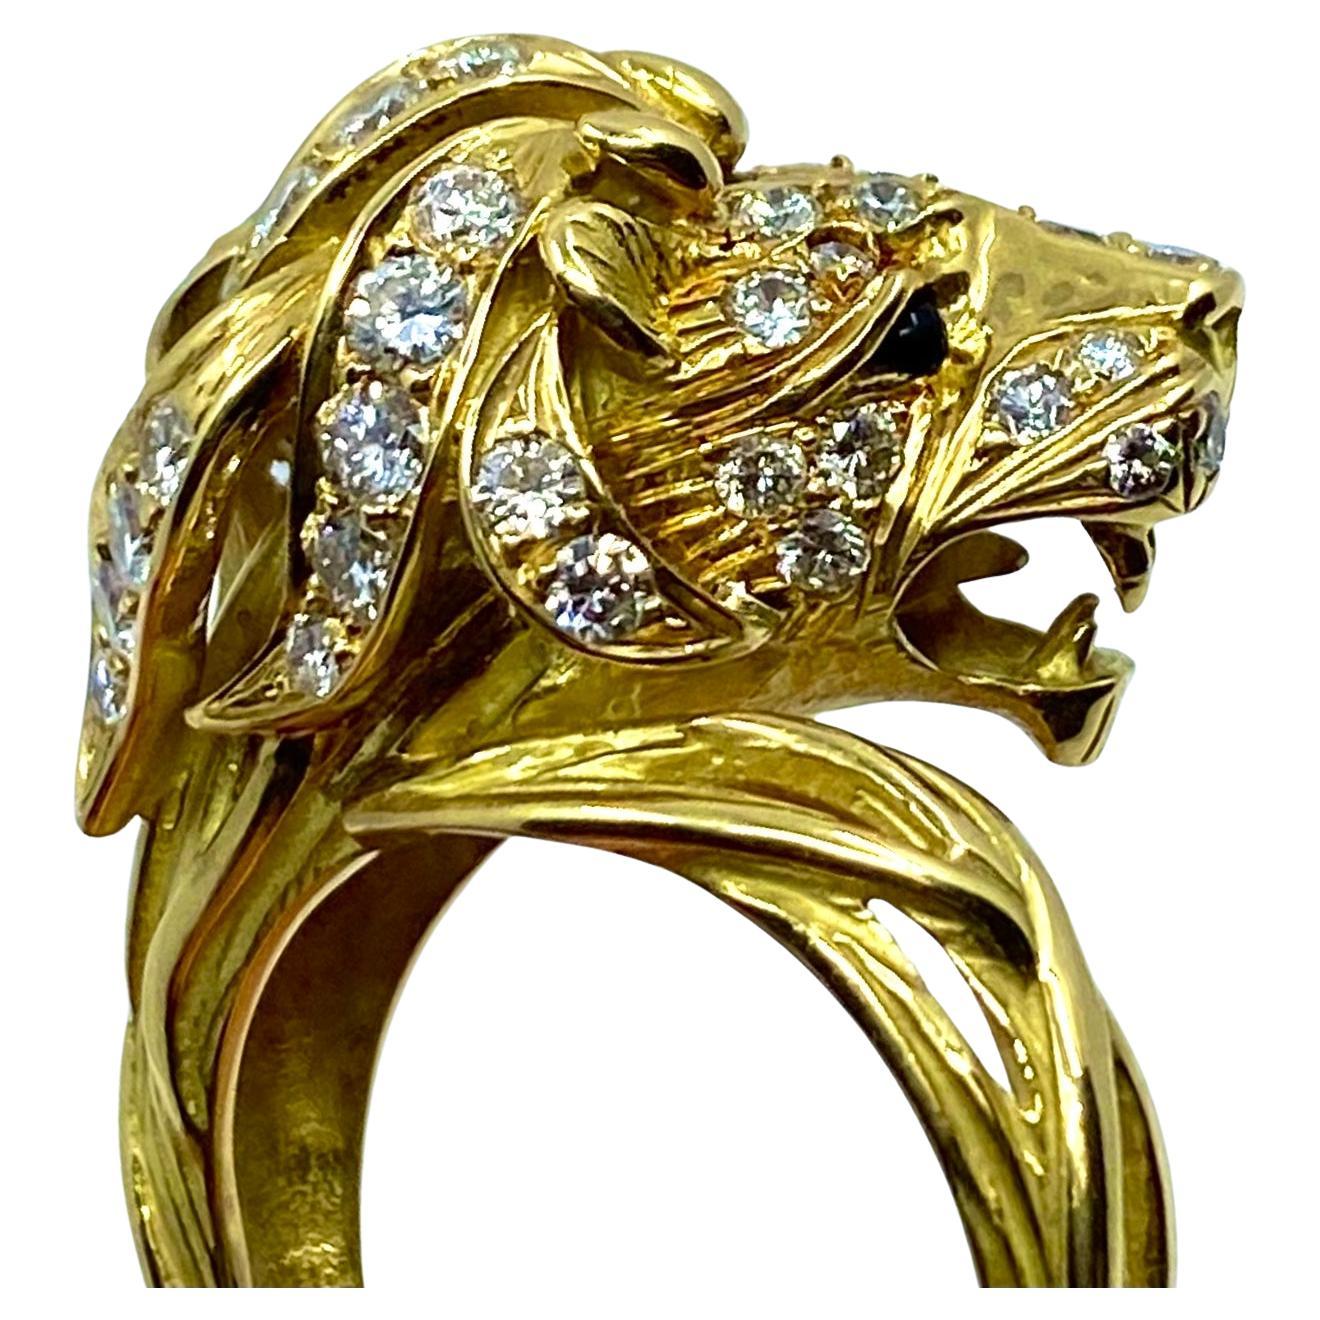 J.P. Bellin Leo Ring 18k Gold Gemstones 1